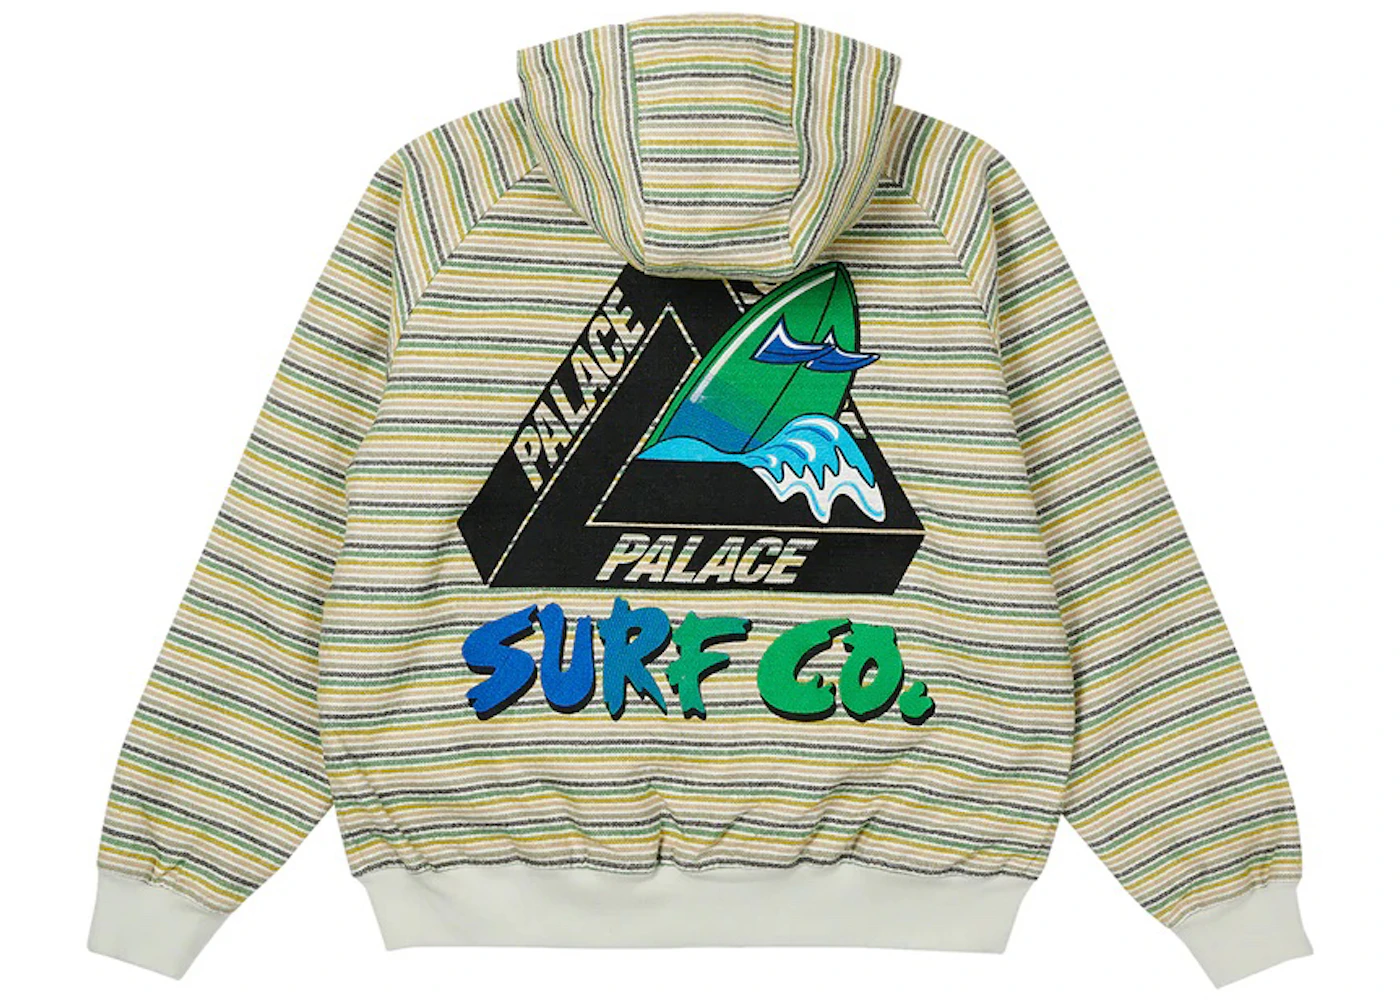 Palace Surf Co Jacket Grey Men's - SS22 - US